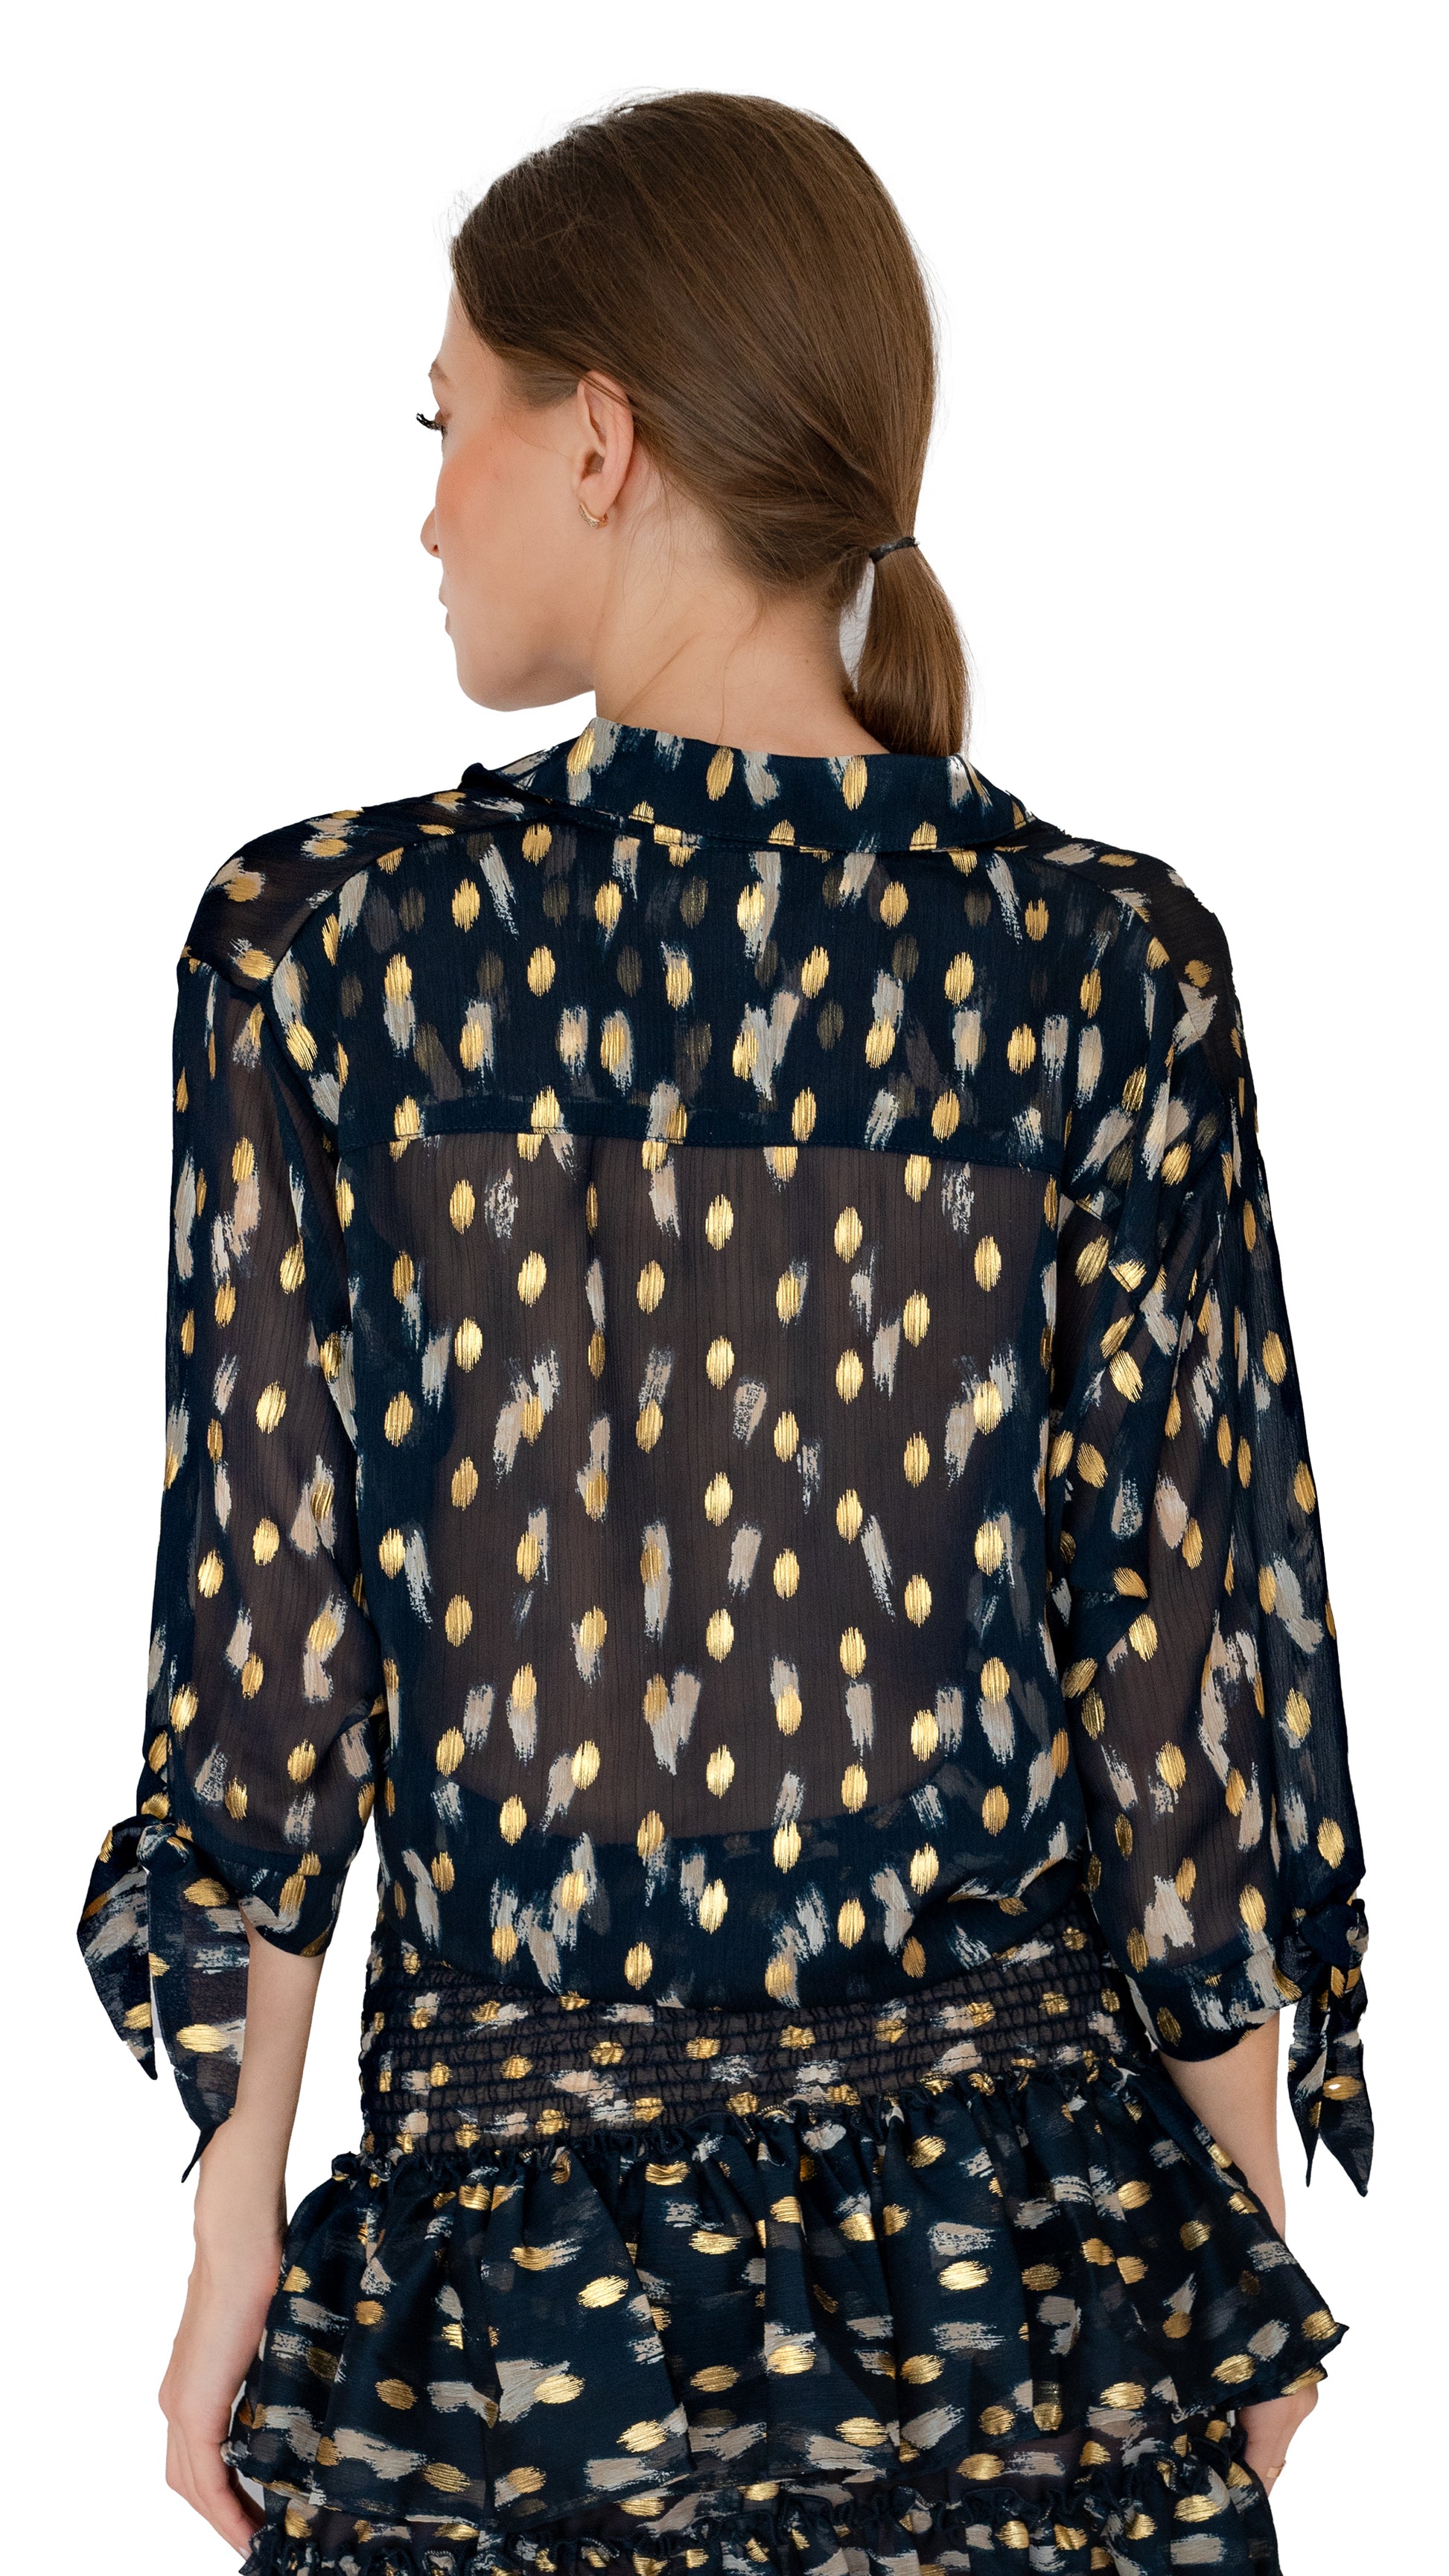 Pop St Barths Mika Shirt Short sleeve top in Navy silk leopard color